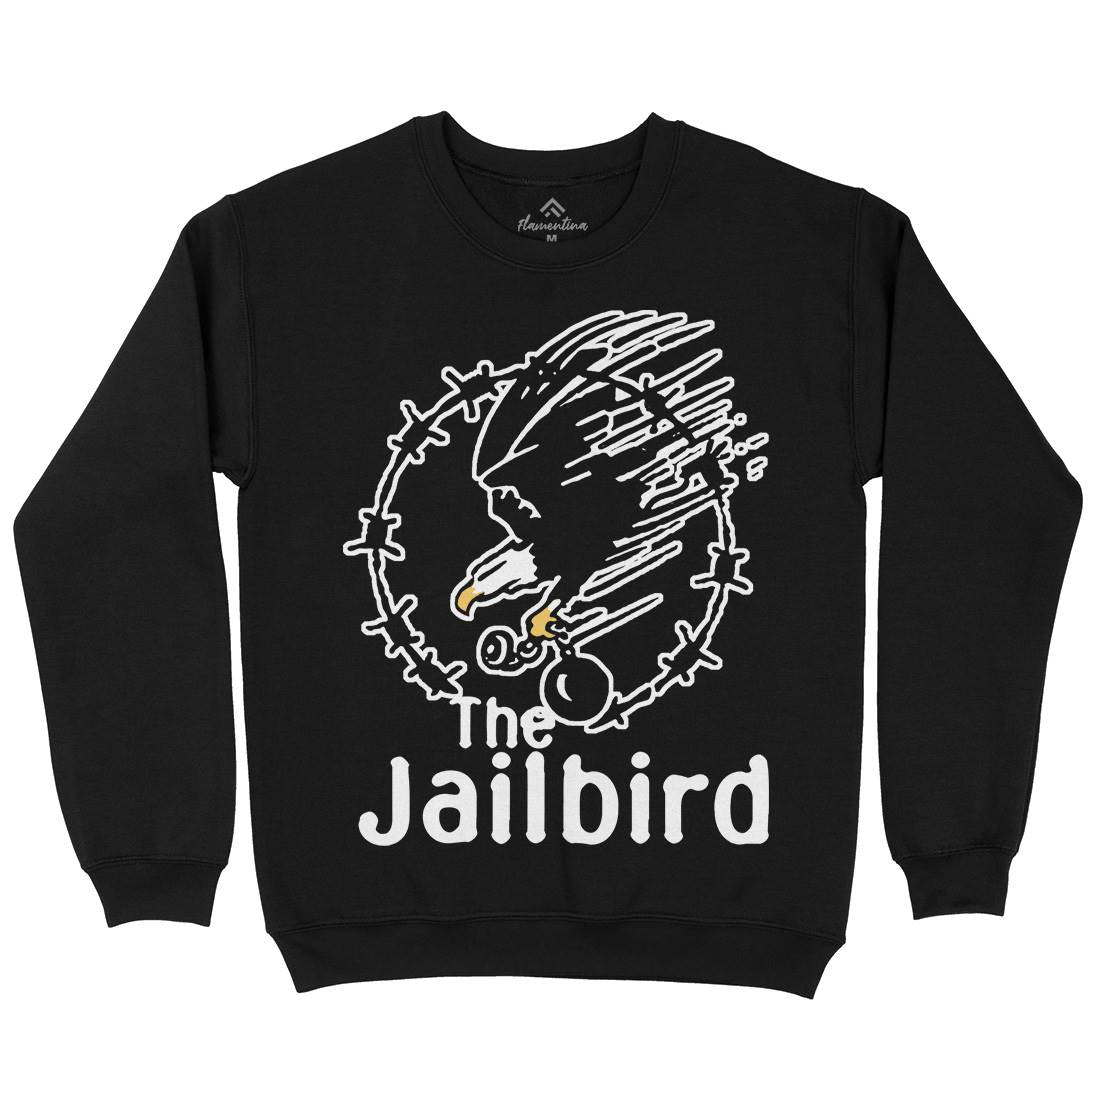 The Jailbird Mens Crew Neck Sweatshirt Army D403